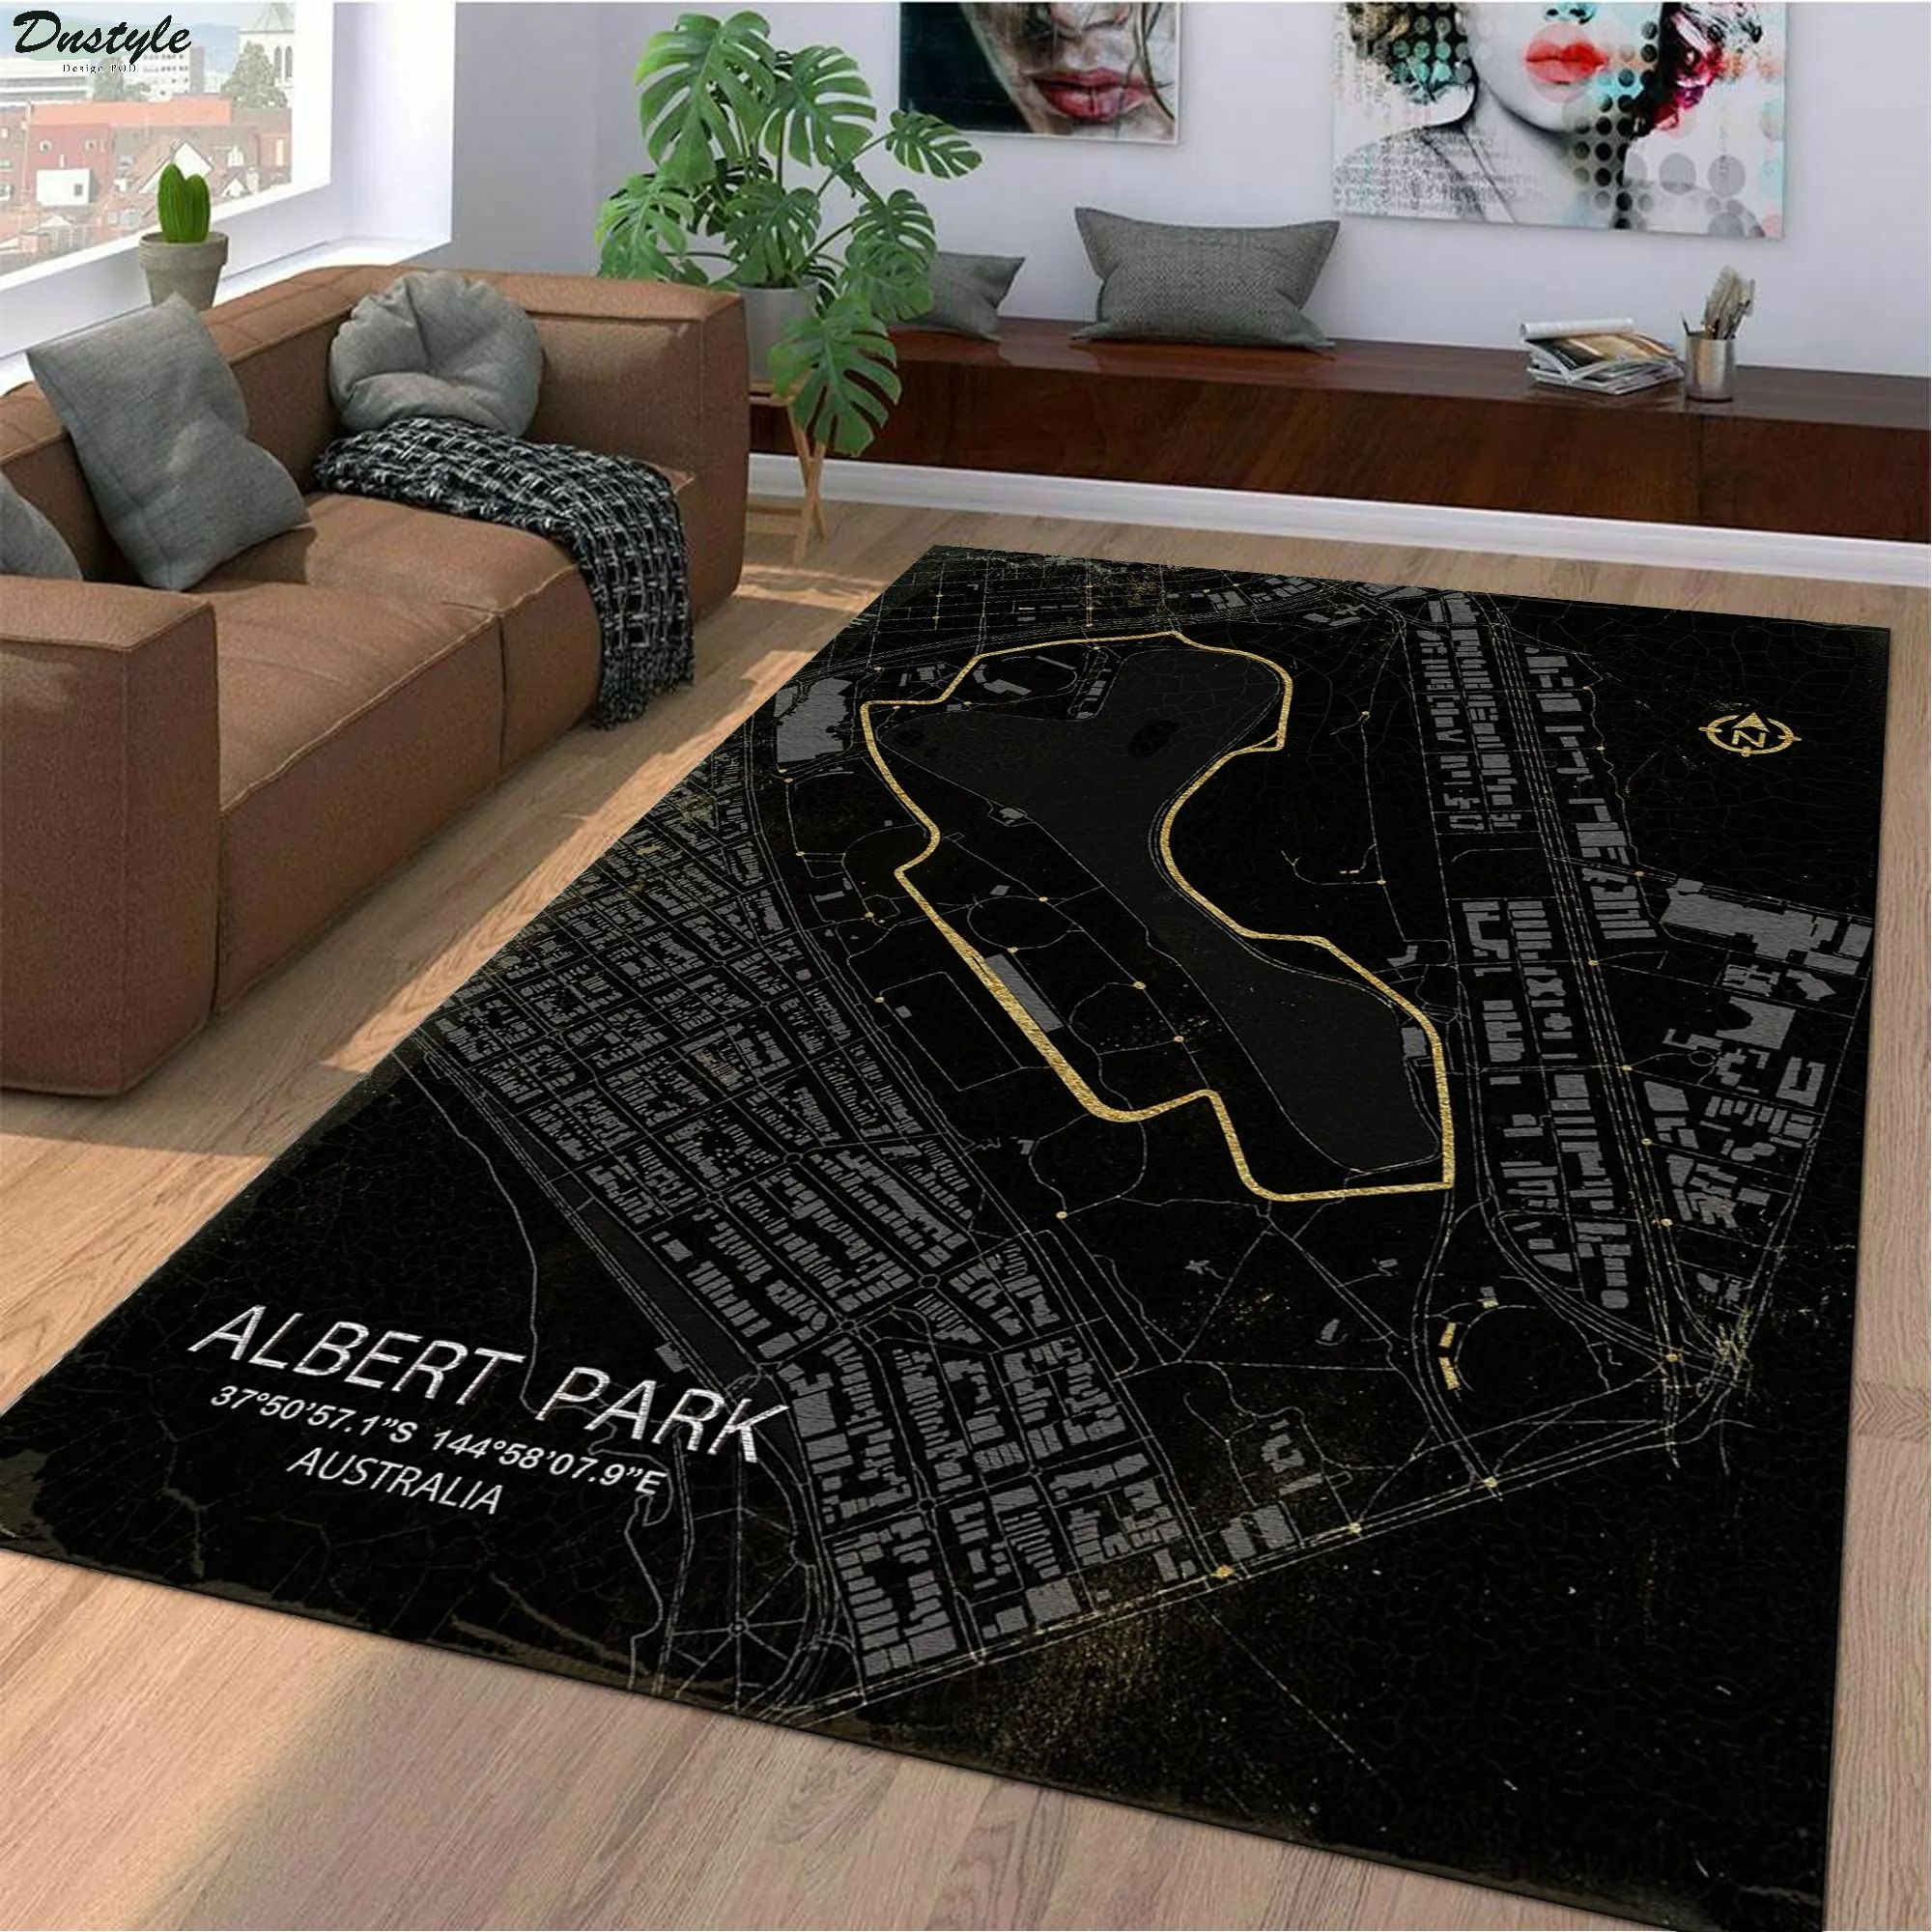 Albert park f1 track rug